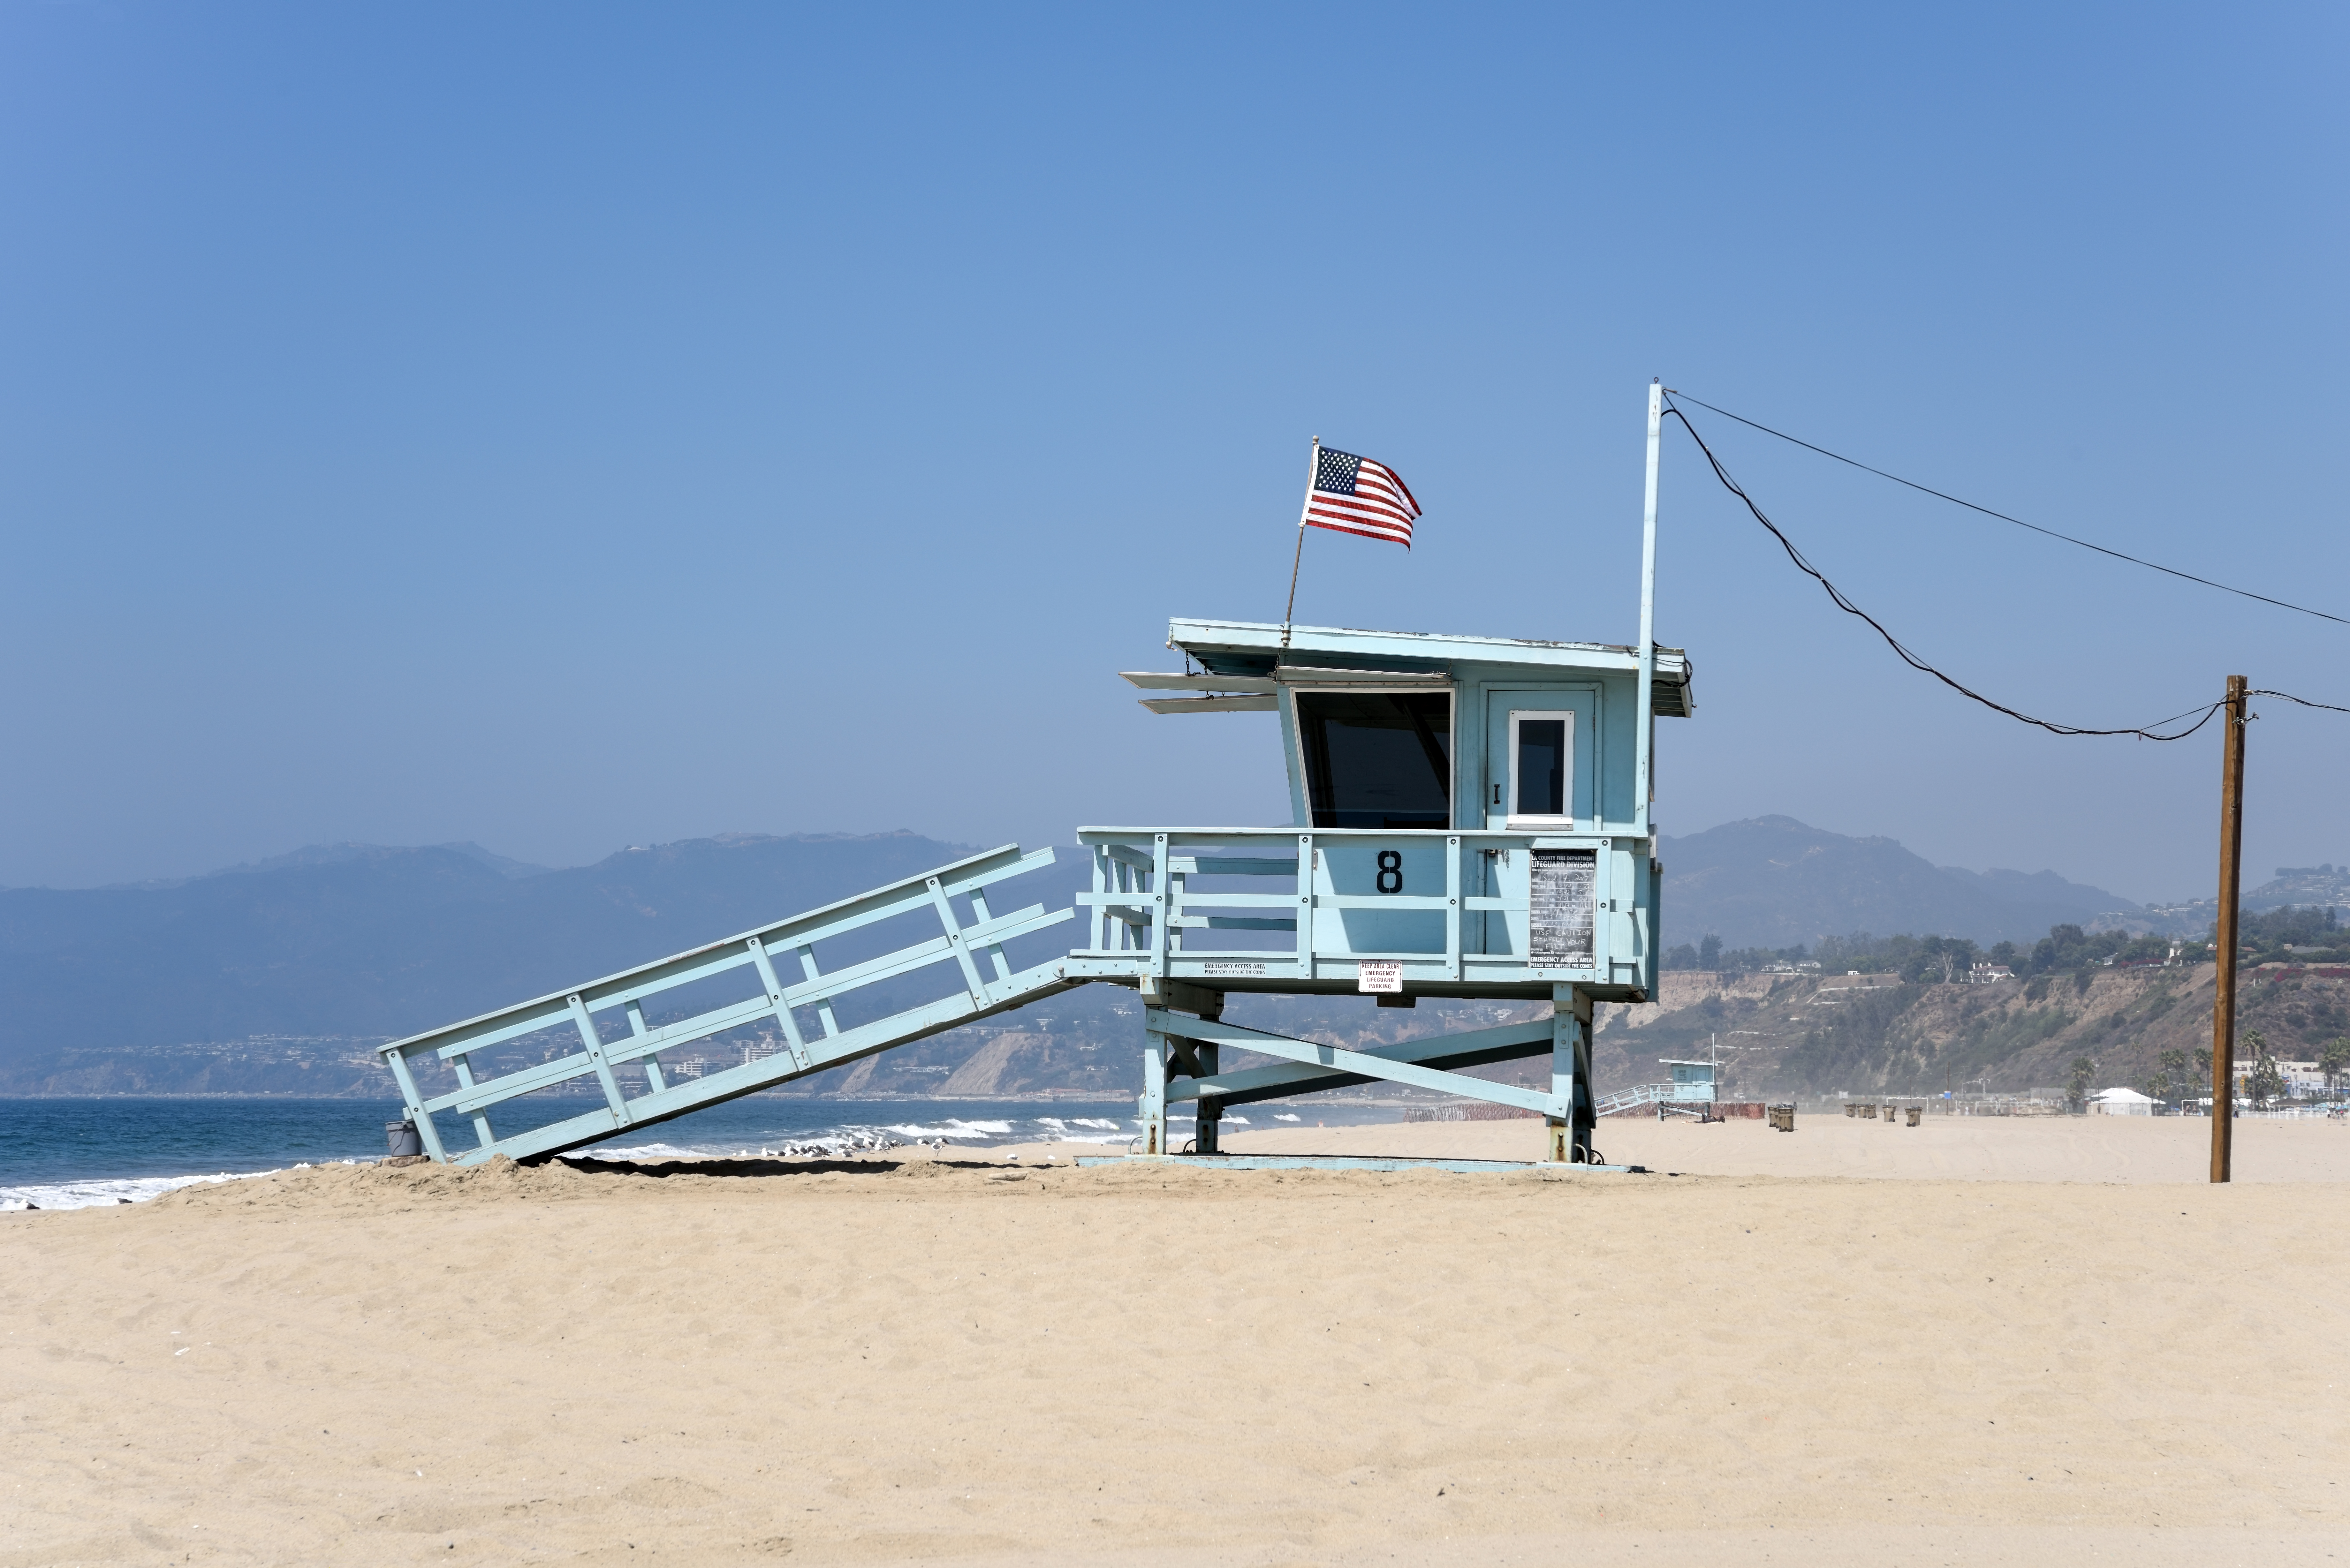 File:Santa Monica – Lifeguard tower (wide) 2017.jpg - Wikimedia Commons